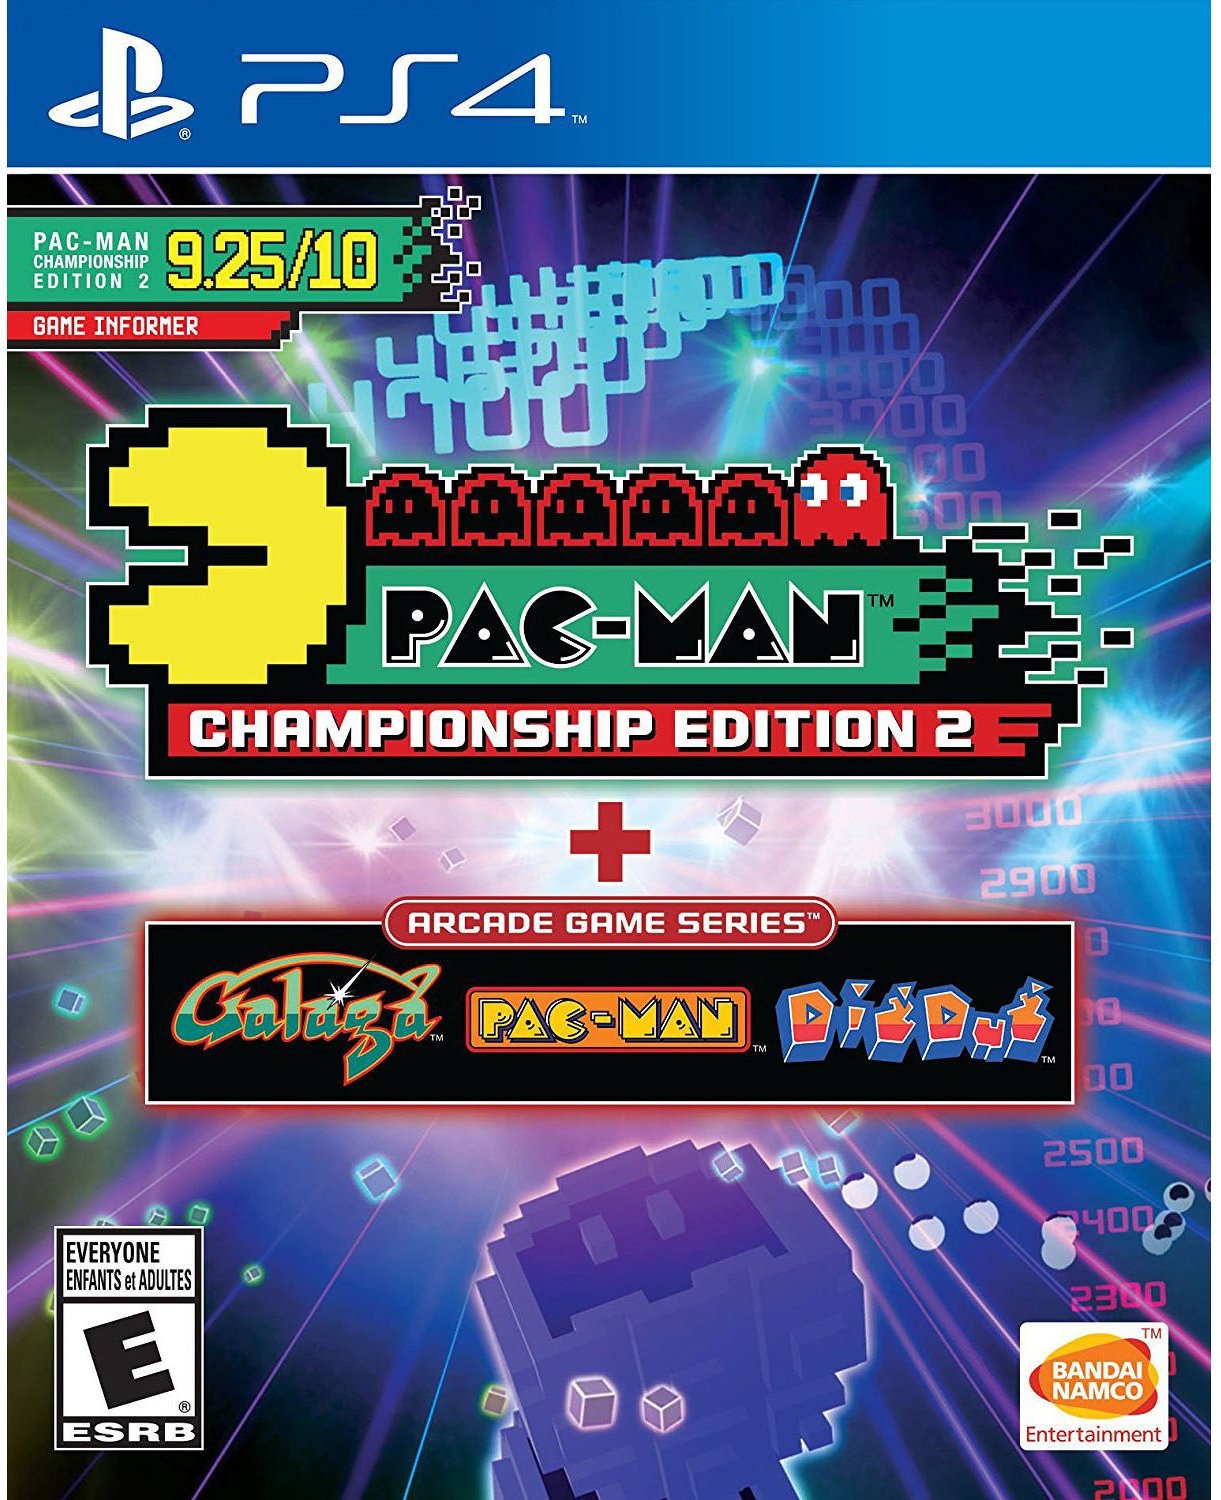 Pac-Man Championship Edition 2 + Arcade Game Series (#)